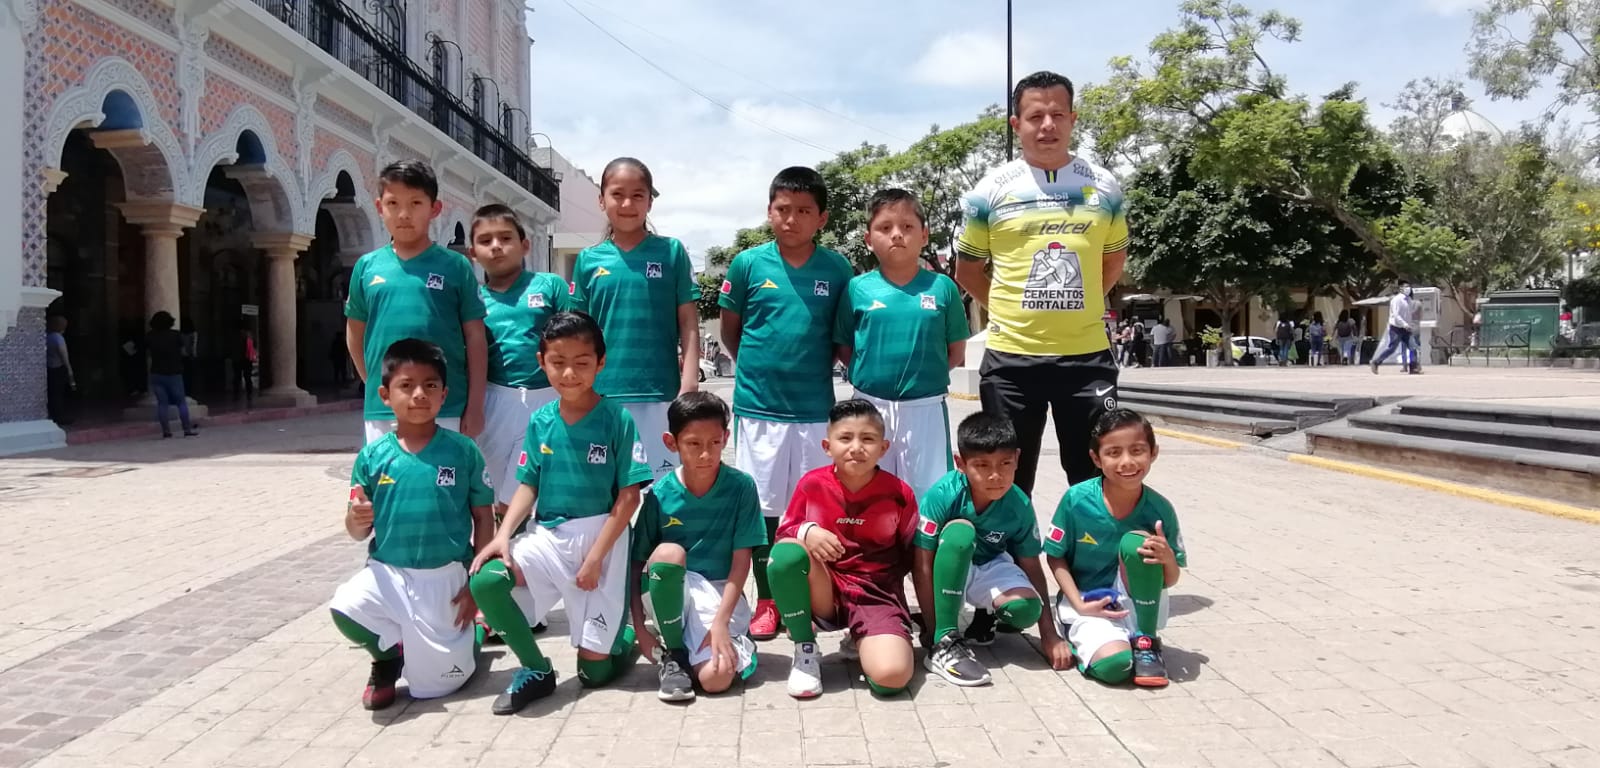 Equipo de fútbol infantil de Tehuacán viajará a Colombia representando a México